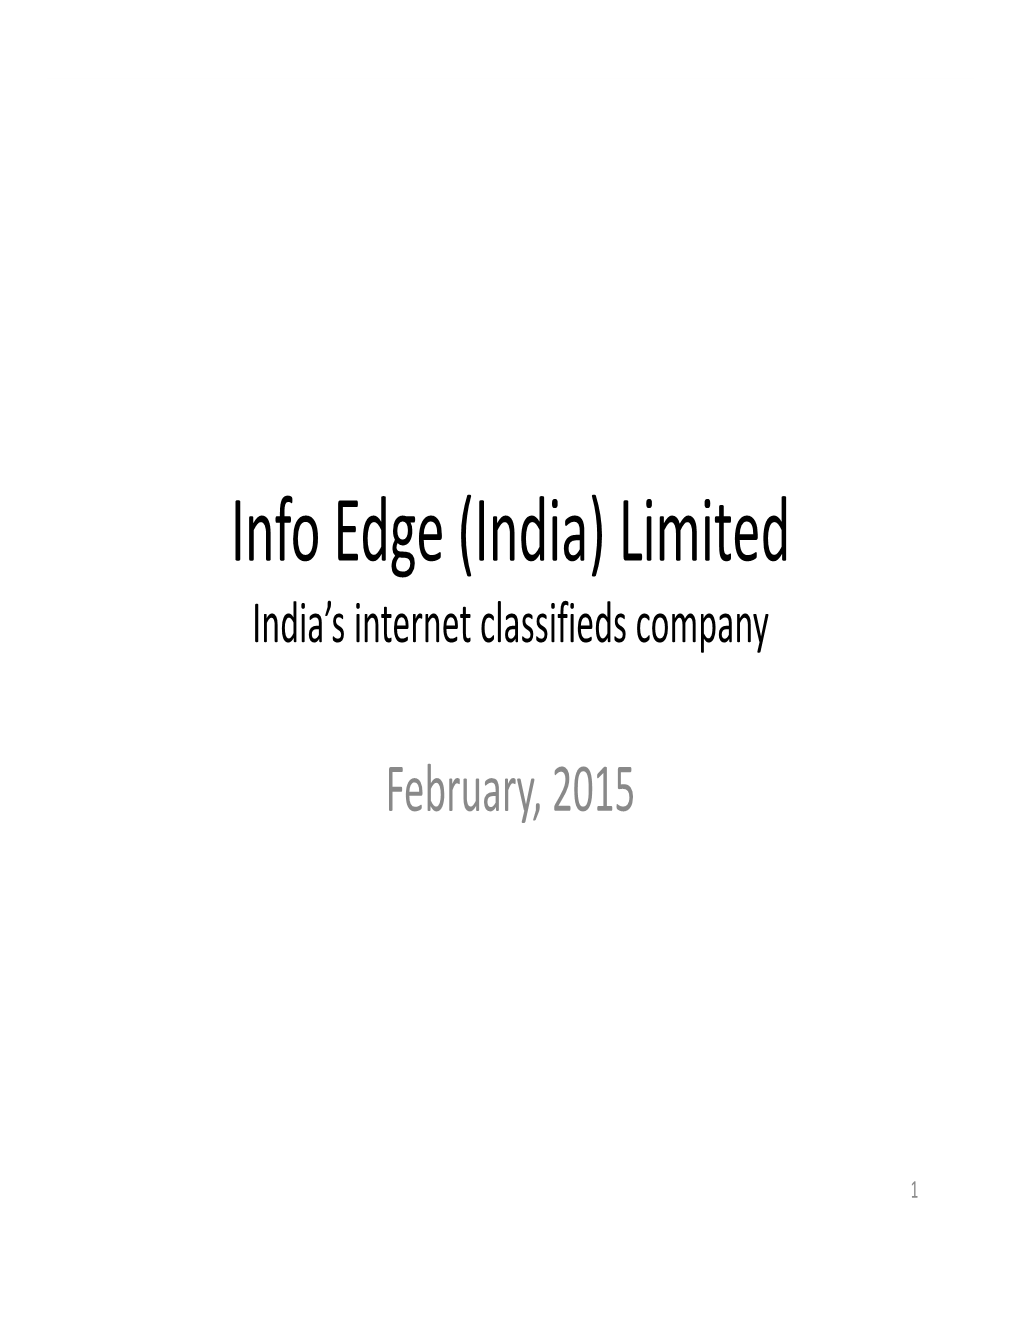 Info Edge (India) Limited India’S Internet Classifieds Company